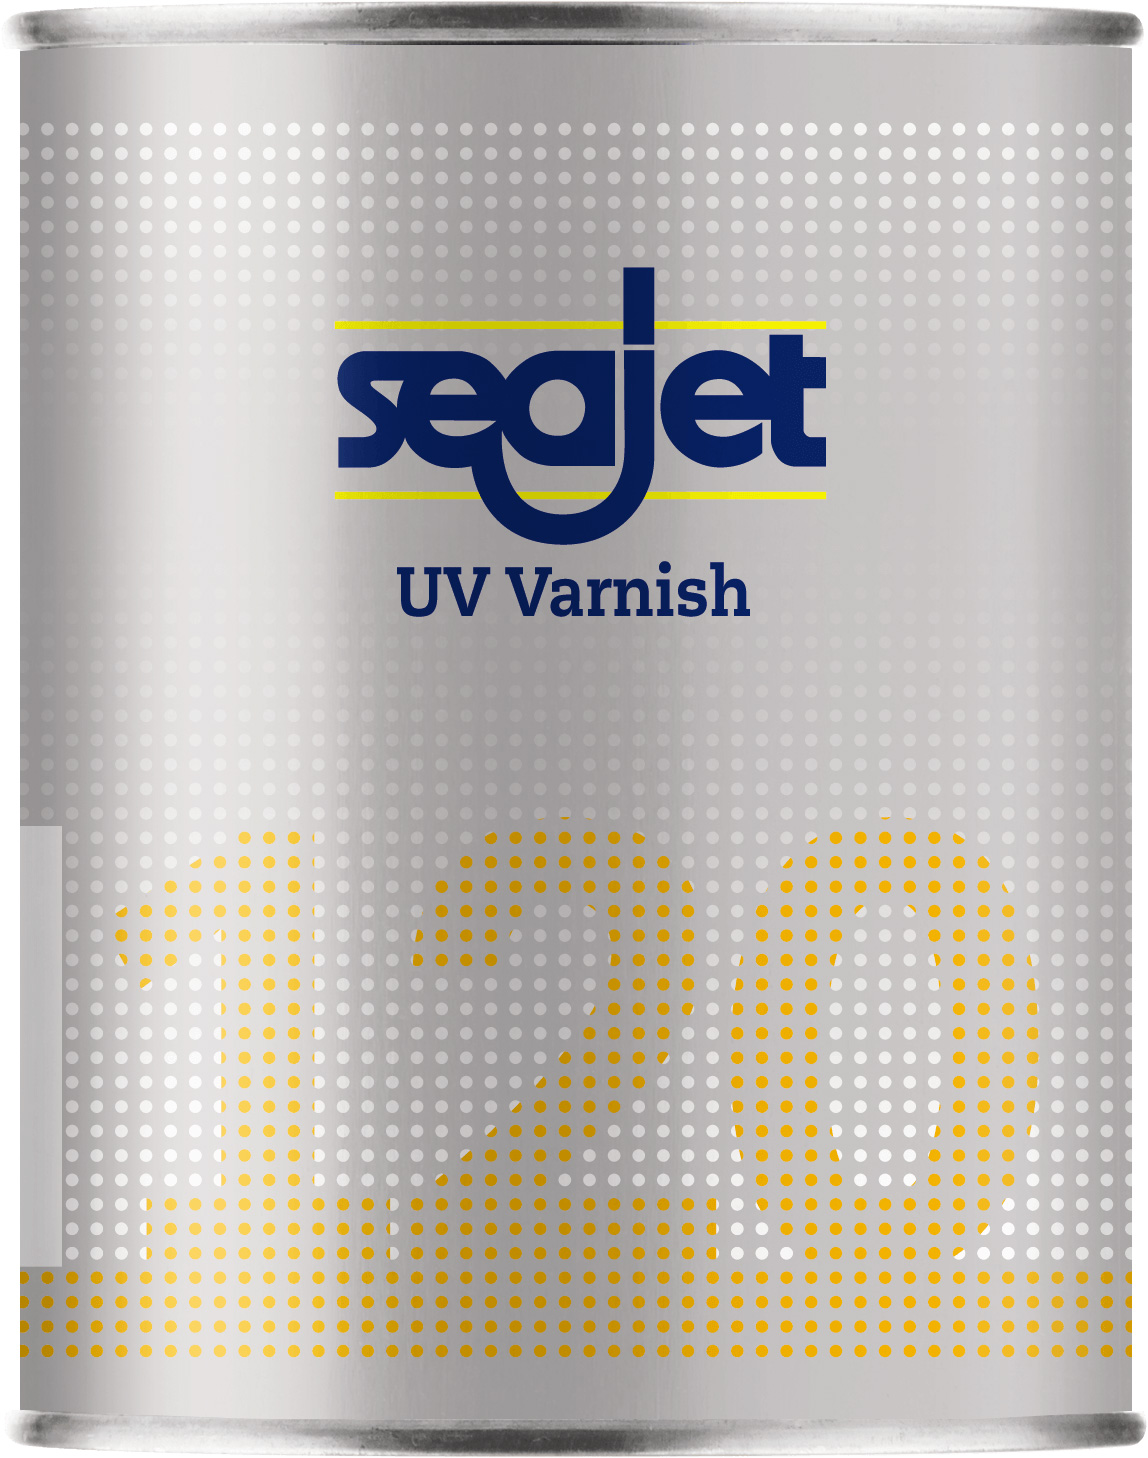 Seajet 120 UV Varnish lakk 0,75 liter